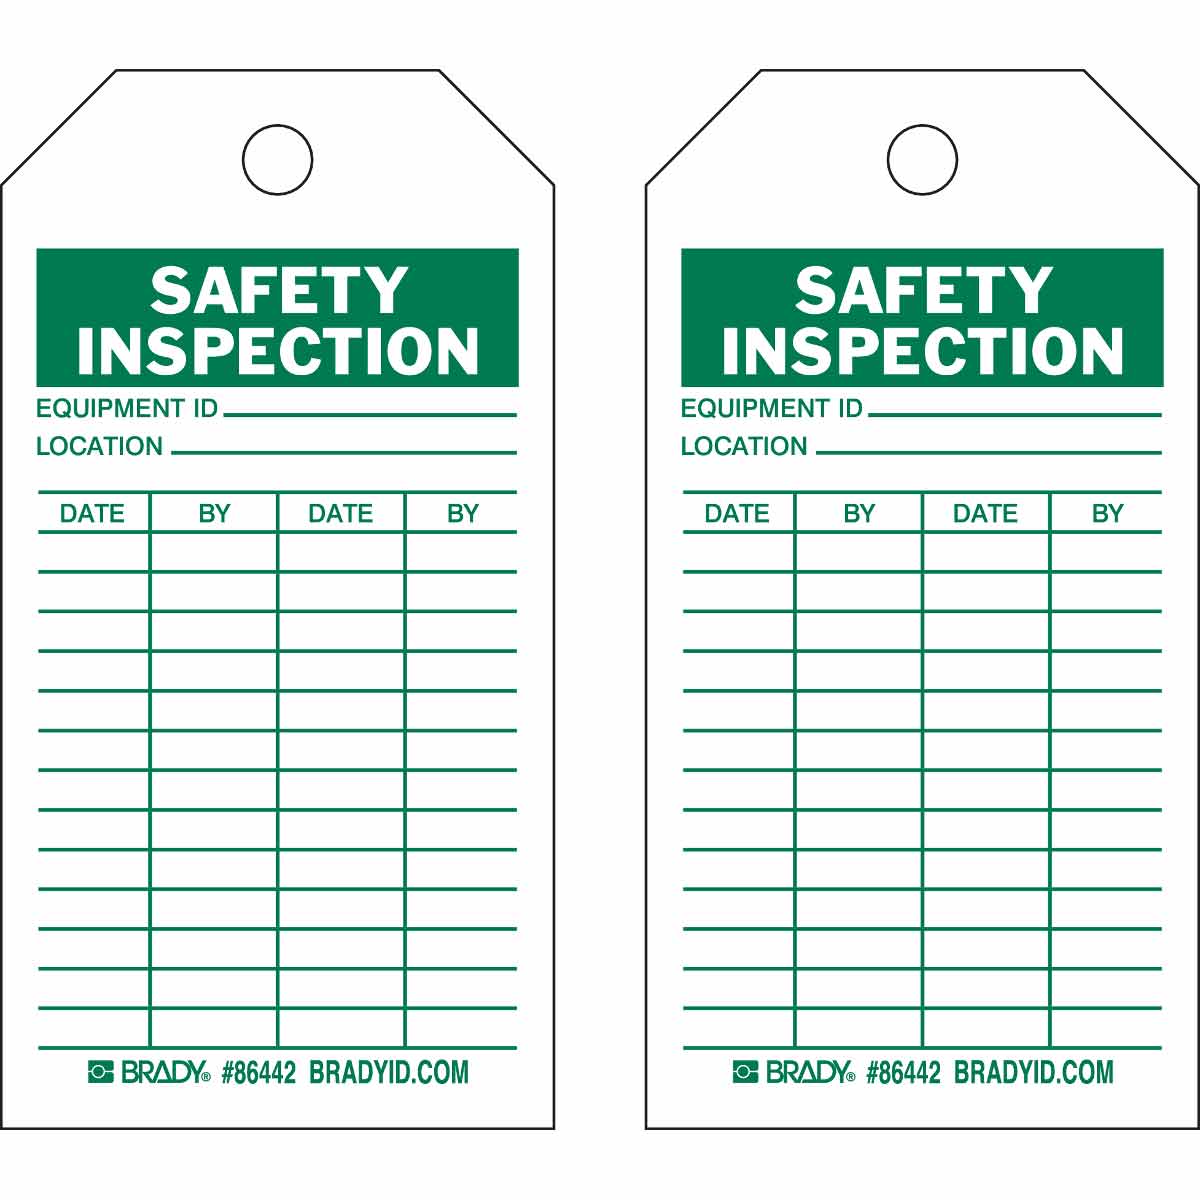 Brady Part: 86666, Safety Inspection Tags